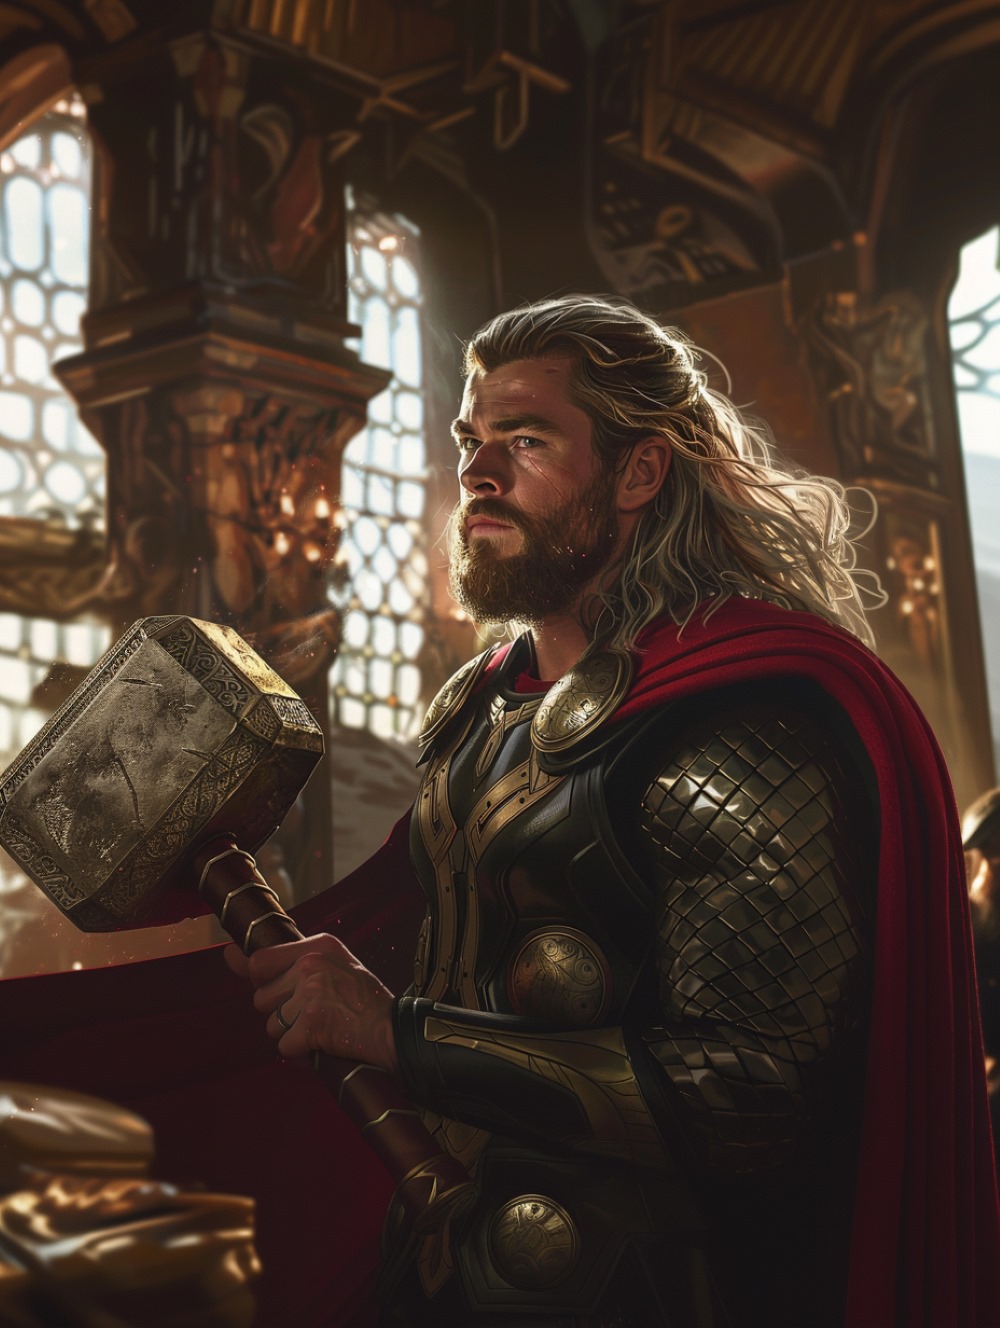 Thor is holding a reforged Mjölnir